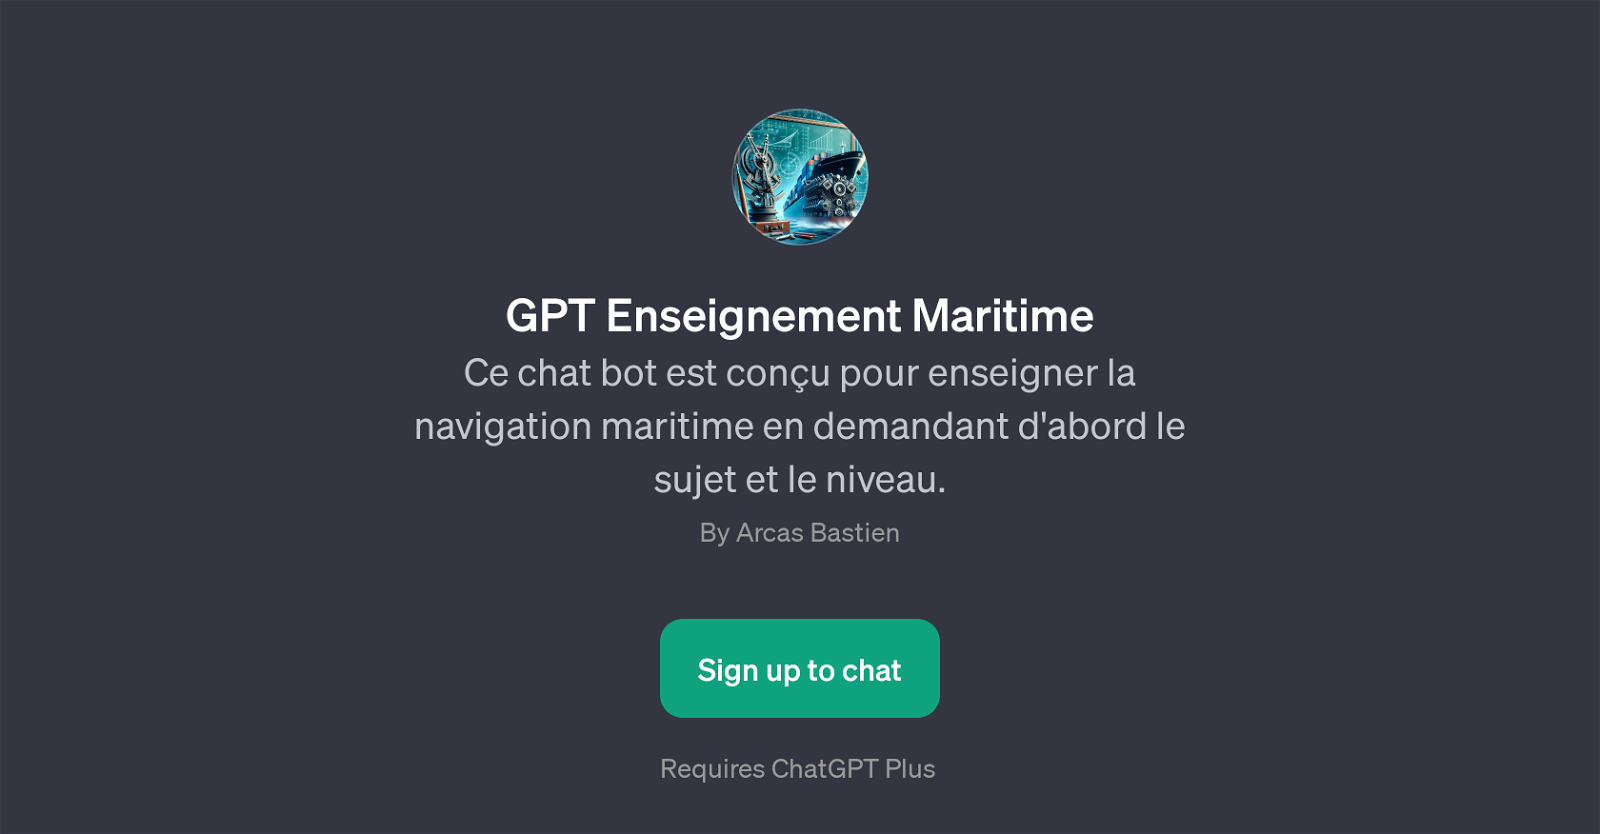 GPT Enseignement Maritime website